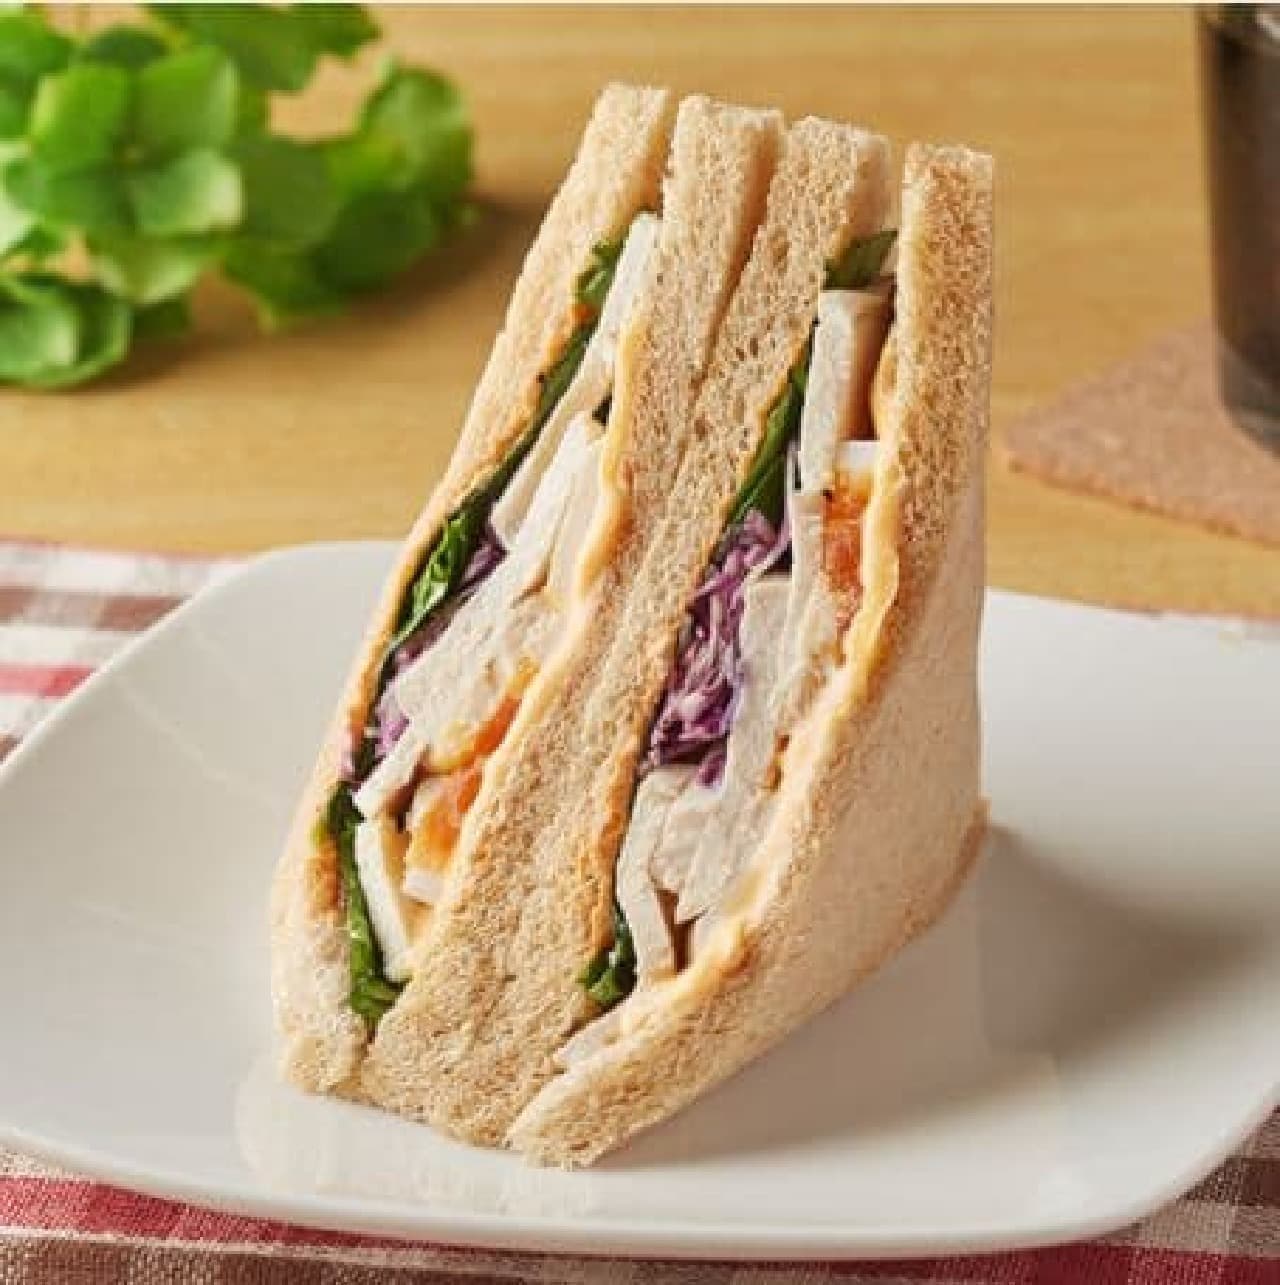 FamilyMart "Whole grain sandwich salad chicken and eggs"